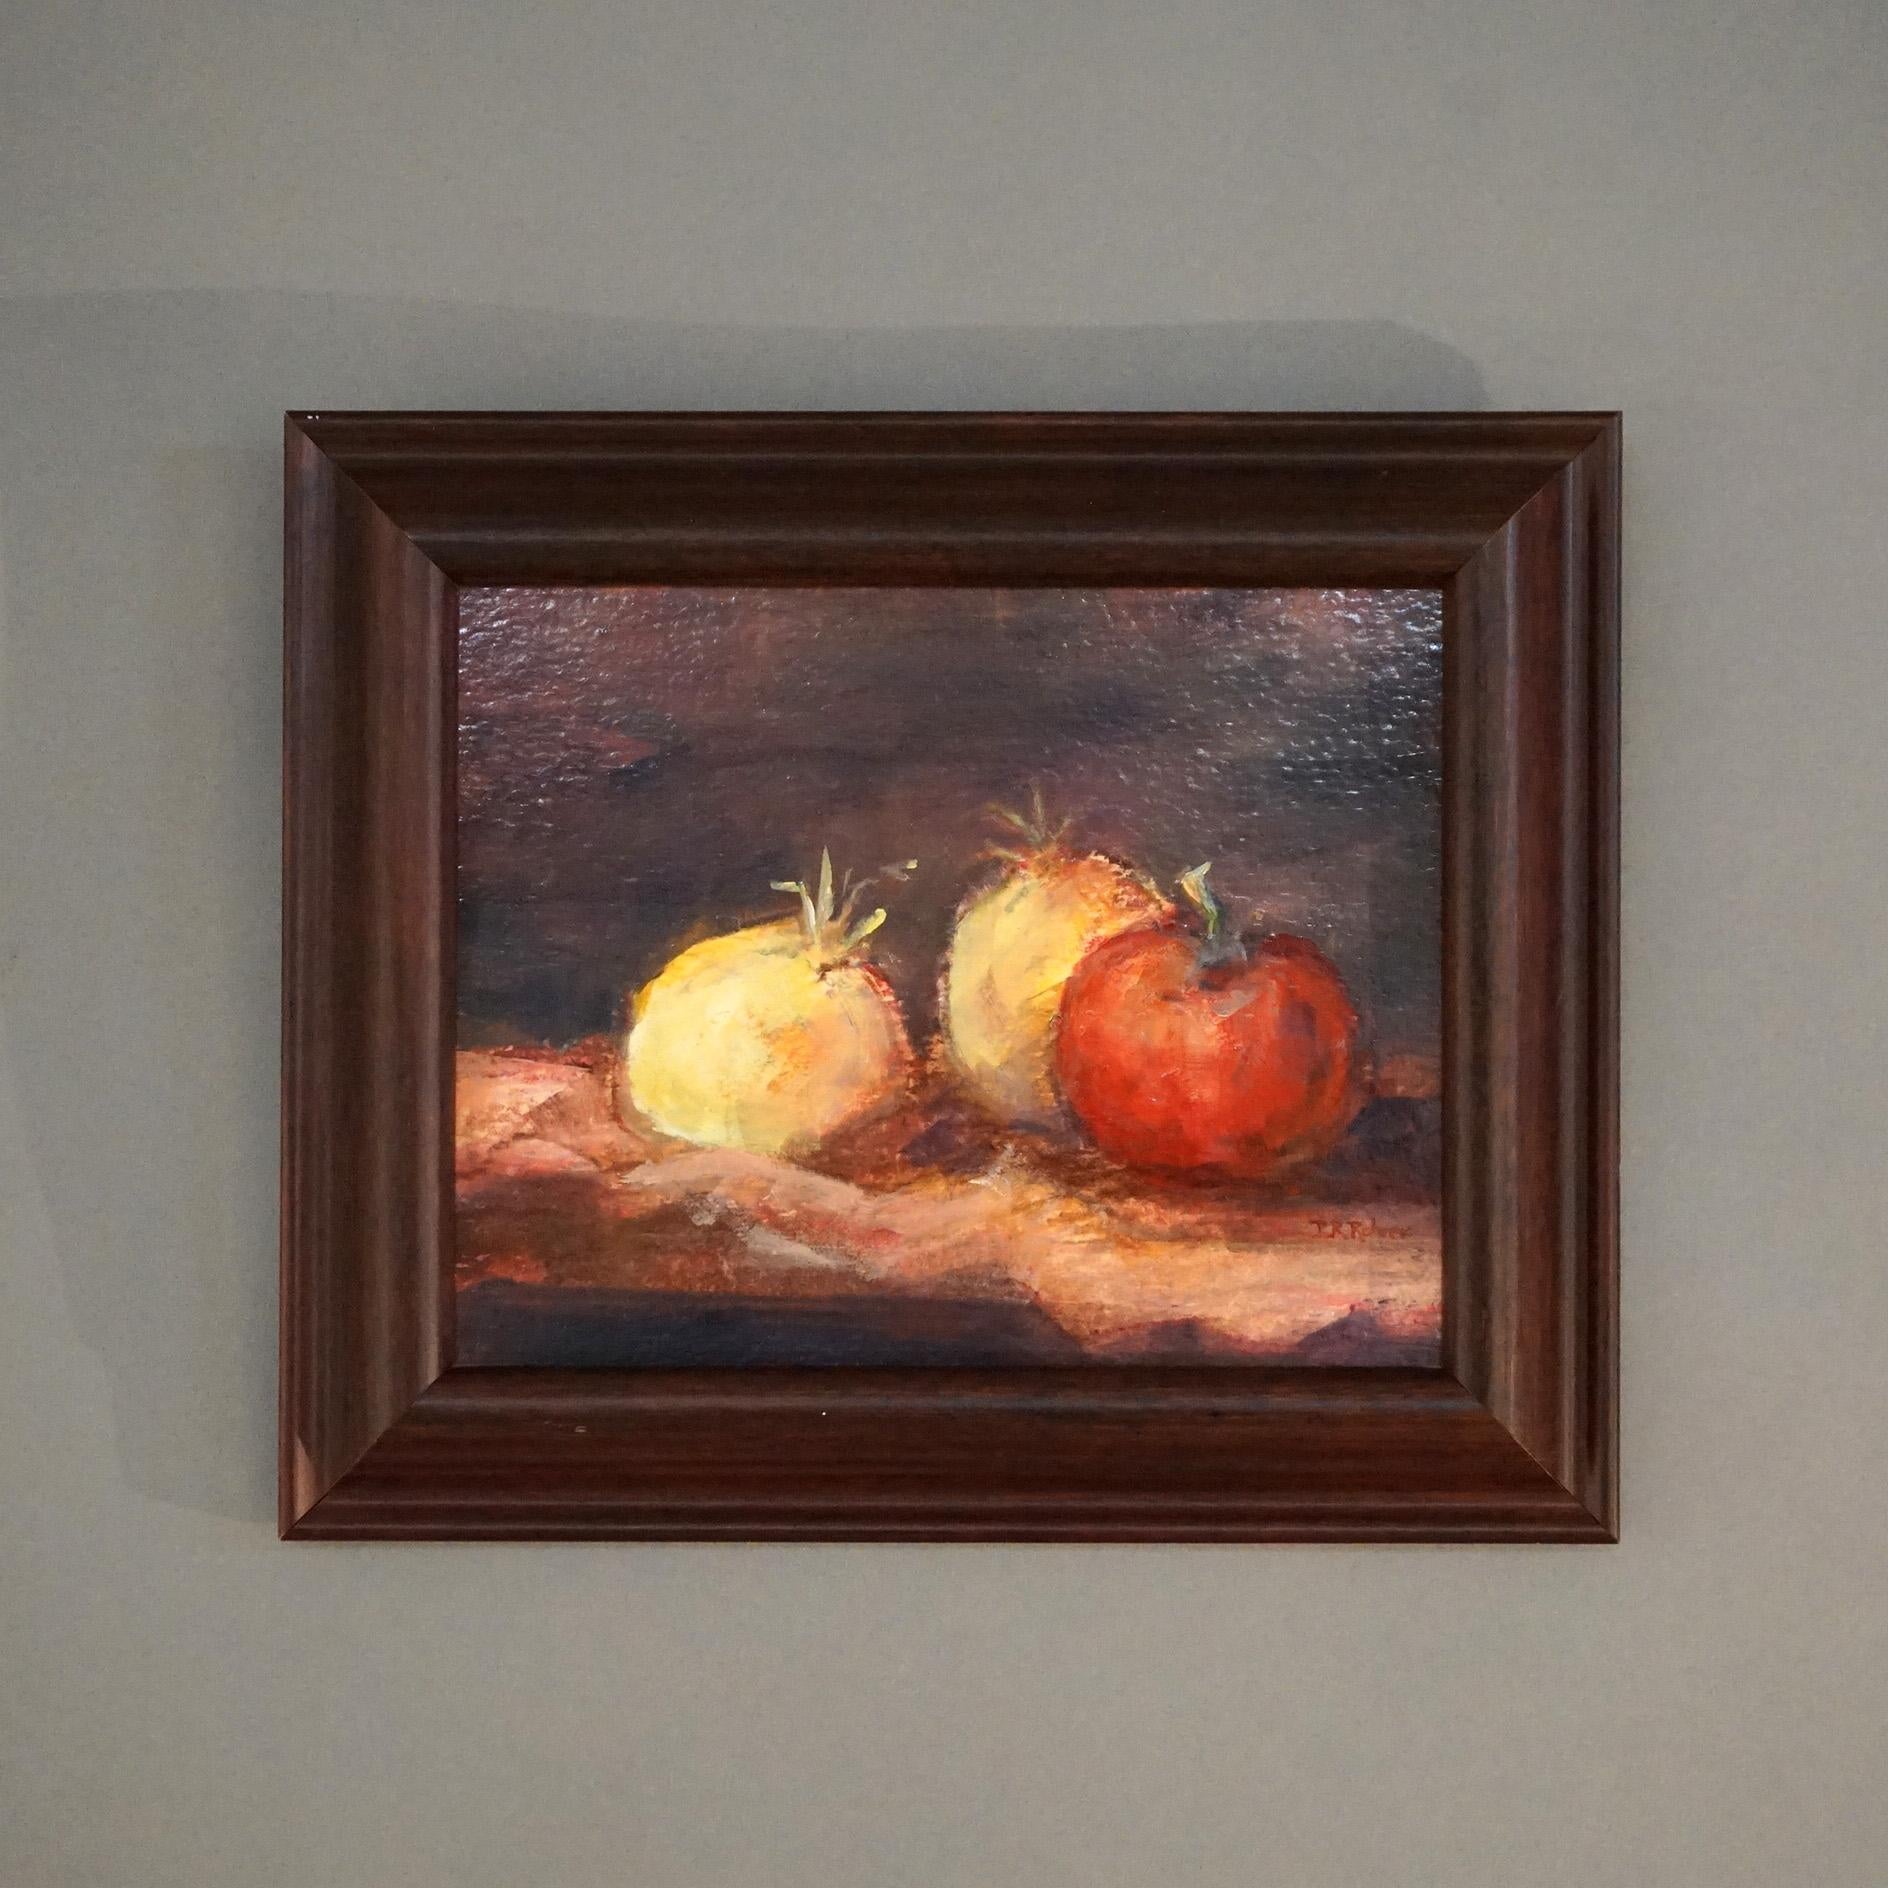 Fruit Still Life Oil on Panel Painting  “Tutti Frutti” Signed P R Rohrer (Pat Rini Rohrer), Framed,  20th C

Measures - 11